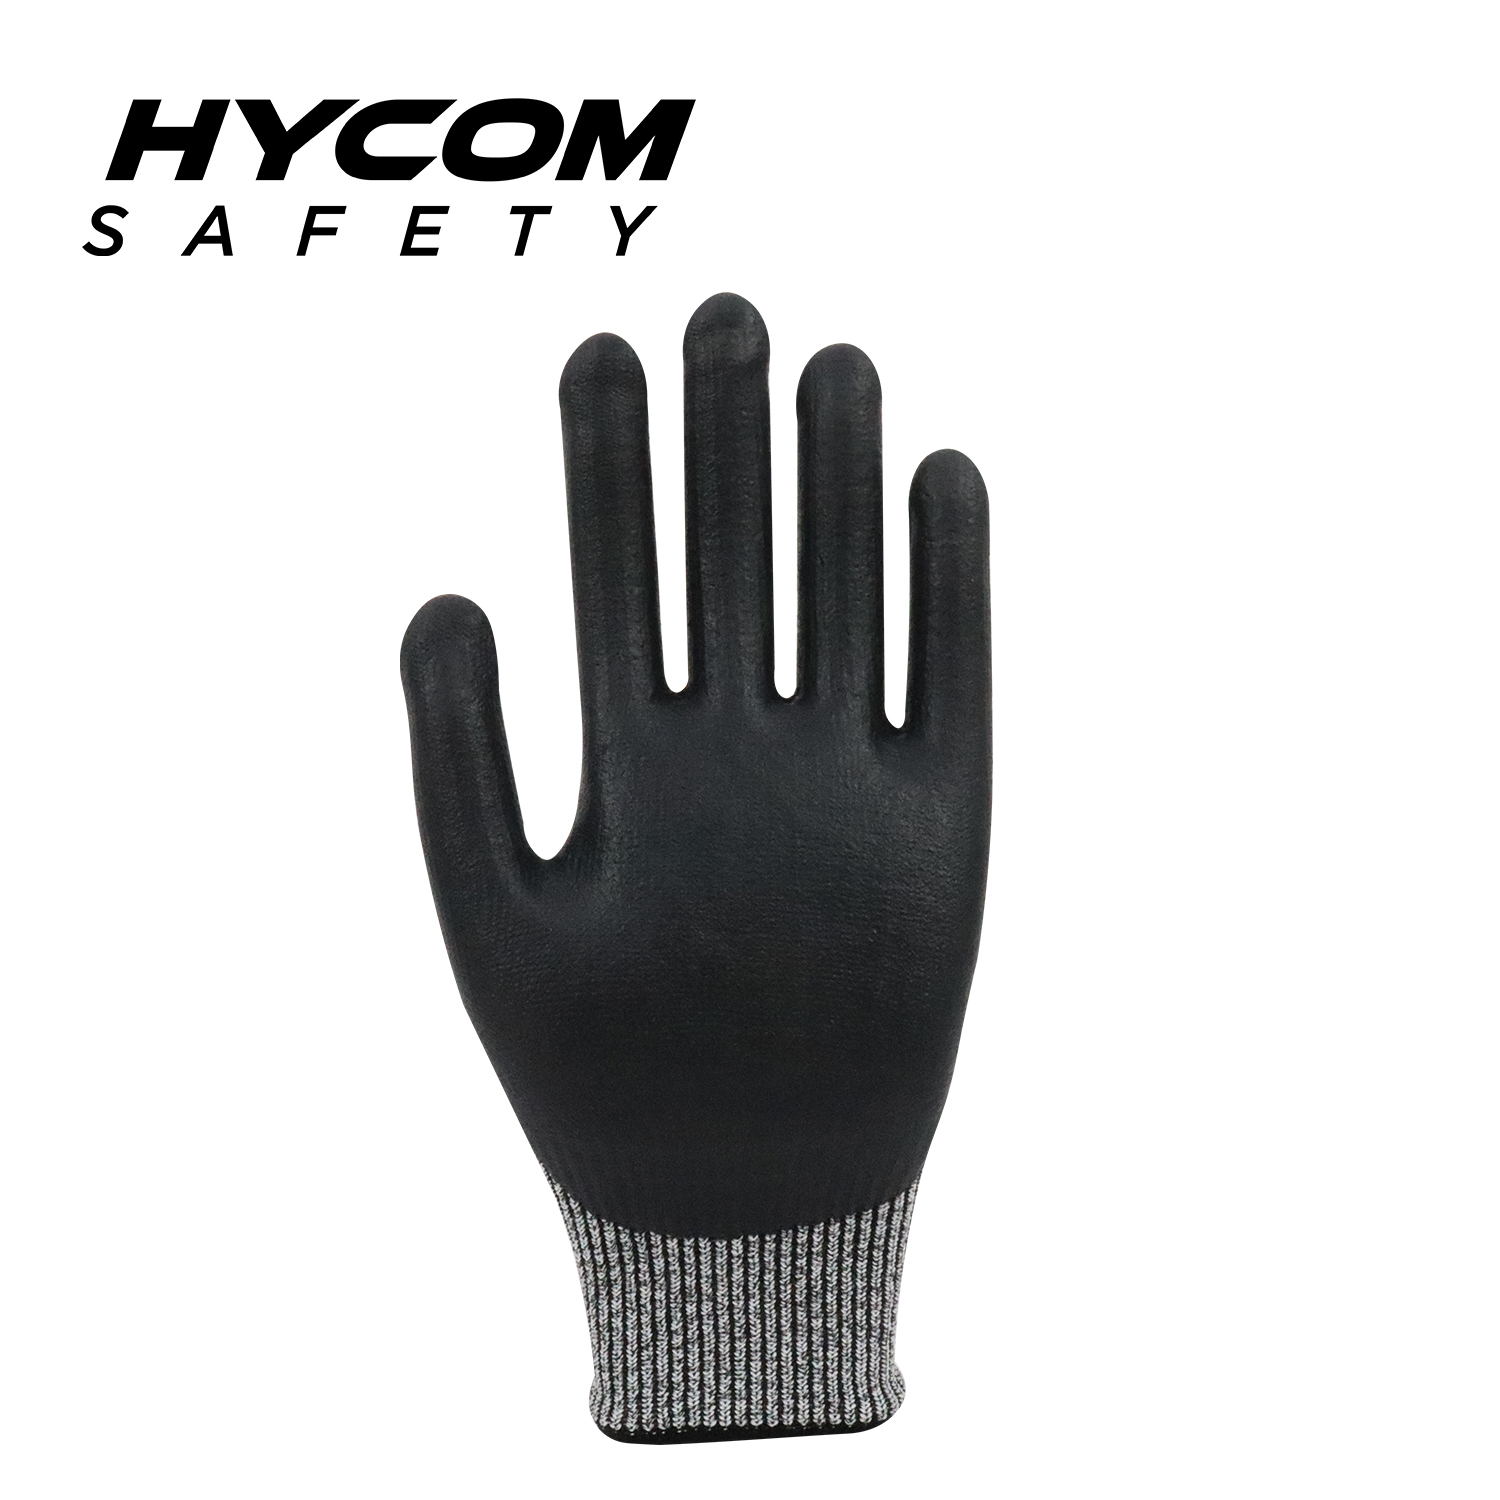 HYCOM 13GG Breath-cut ANSI 4 Cut Resistant Glove with Palm Foam Nitrile Coating